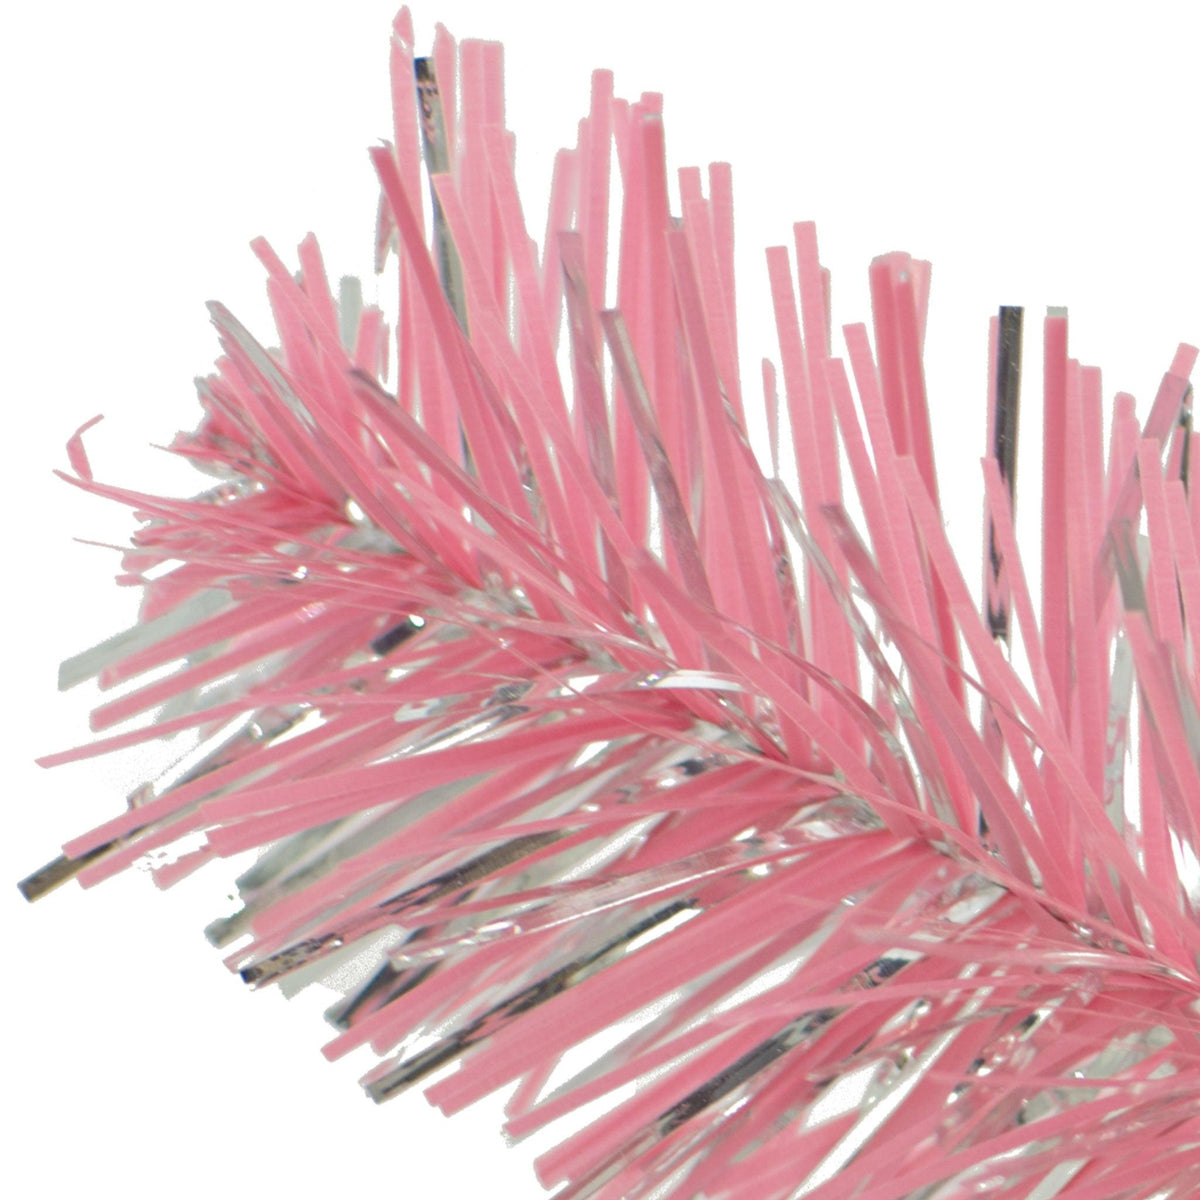 Lee Display's brand new 25ft Shiny Pink & Metallic Silver Tinsel Garlands and Fringe Embellishments on sale at leedisplay.com